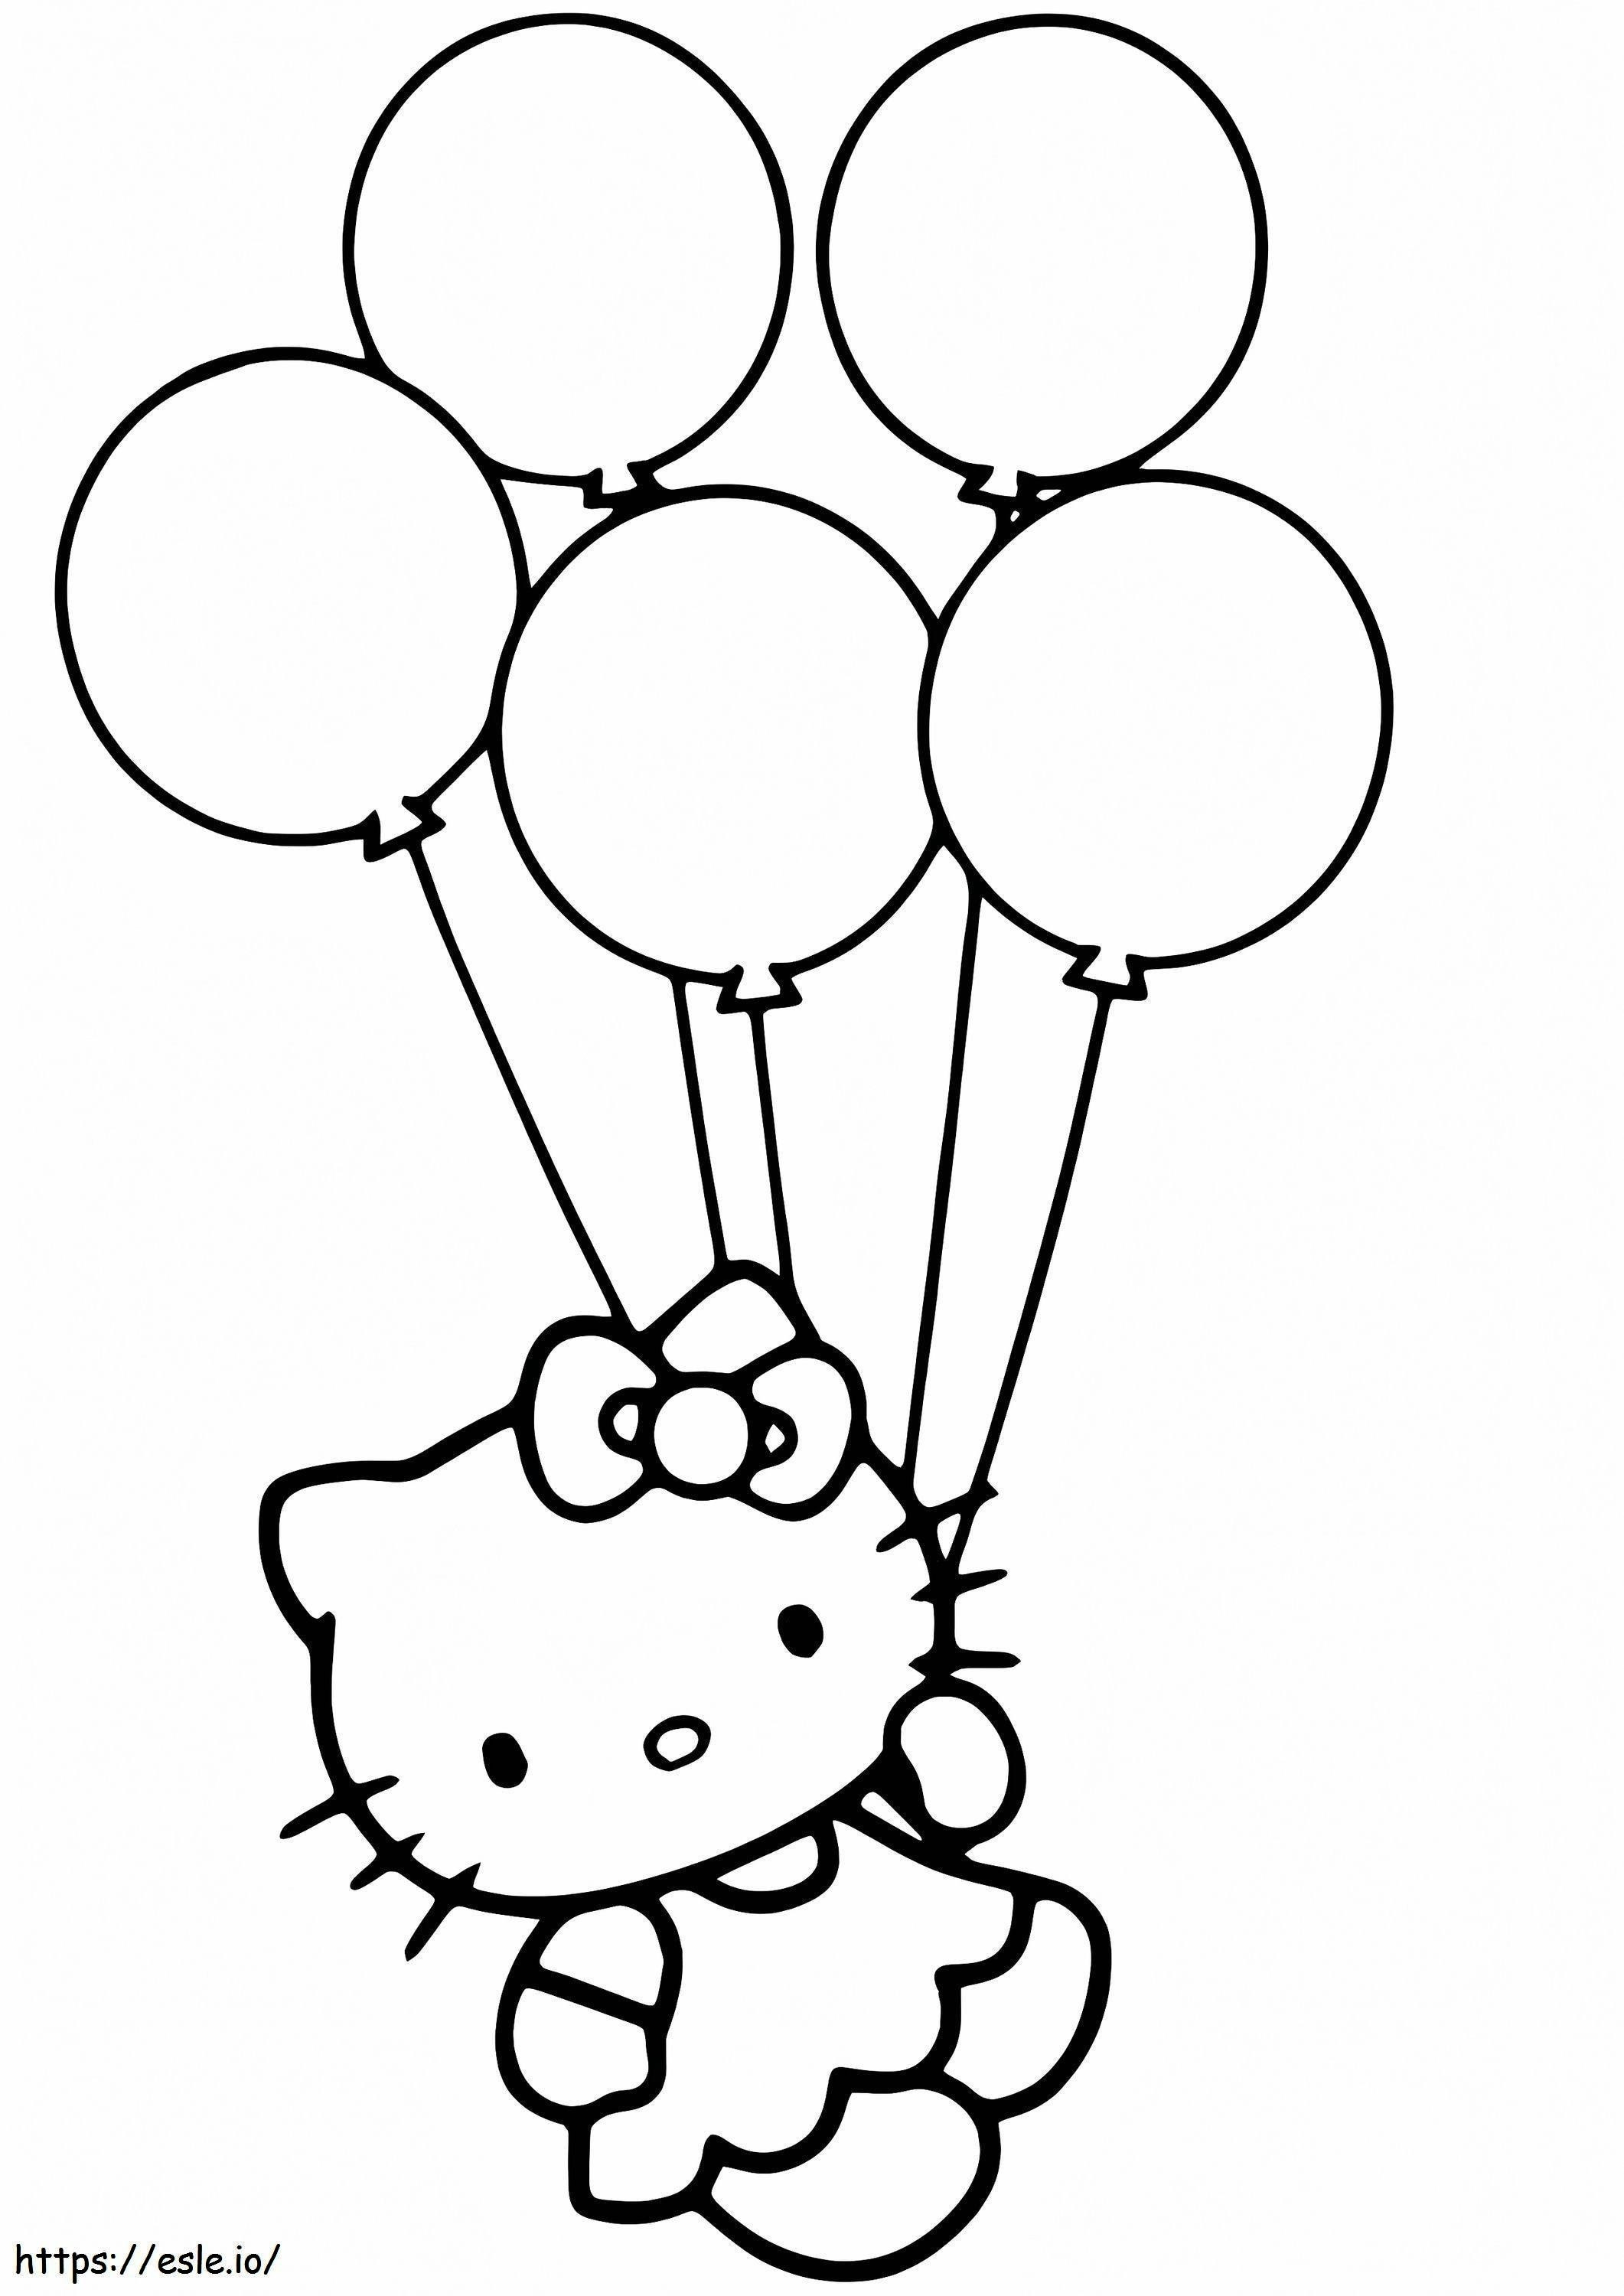 Coloriage Hello Kitty volant dans un ballon à imprimer dessin